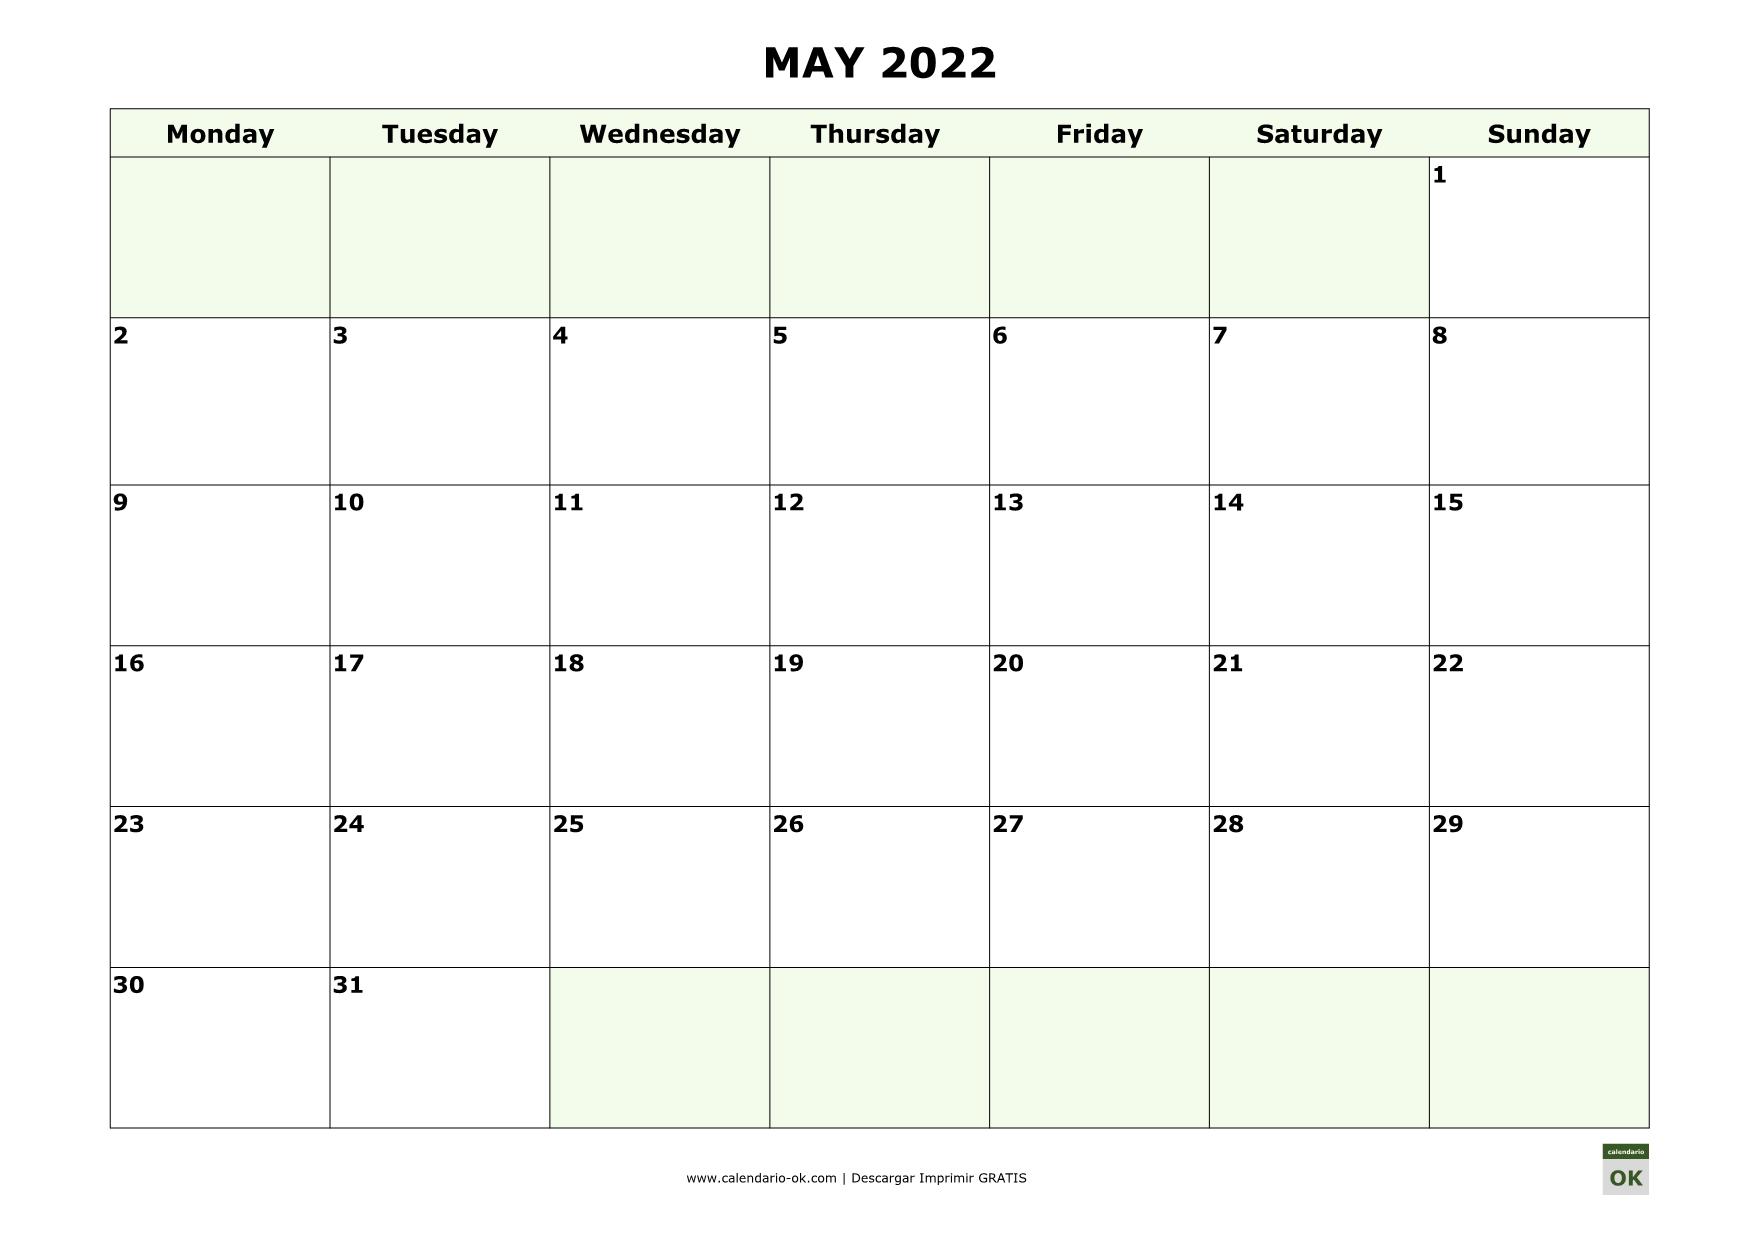 MAYO 2022 calendario en INGLES